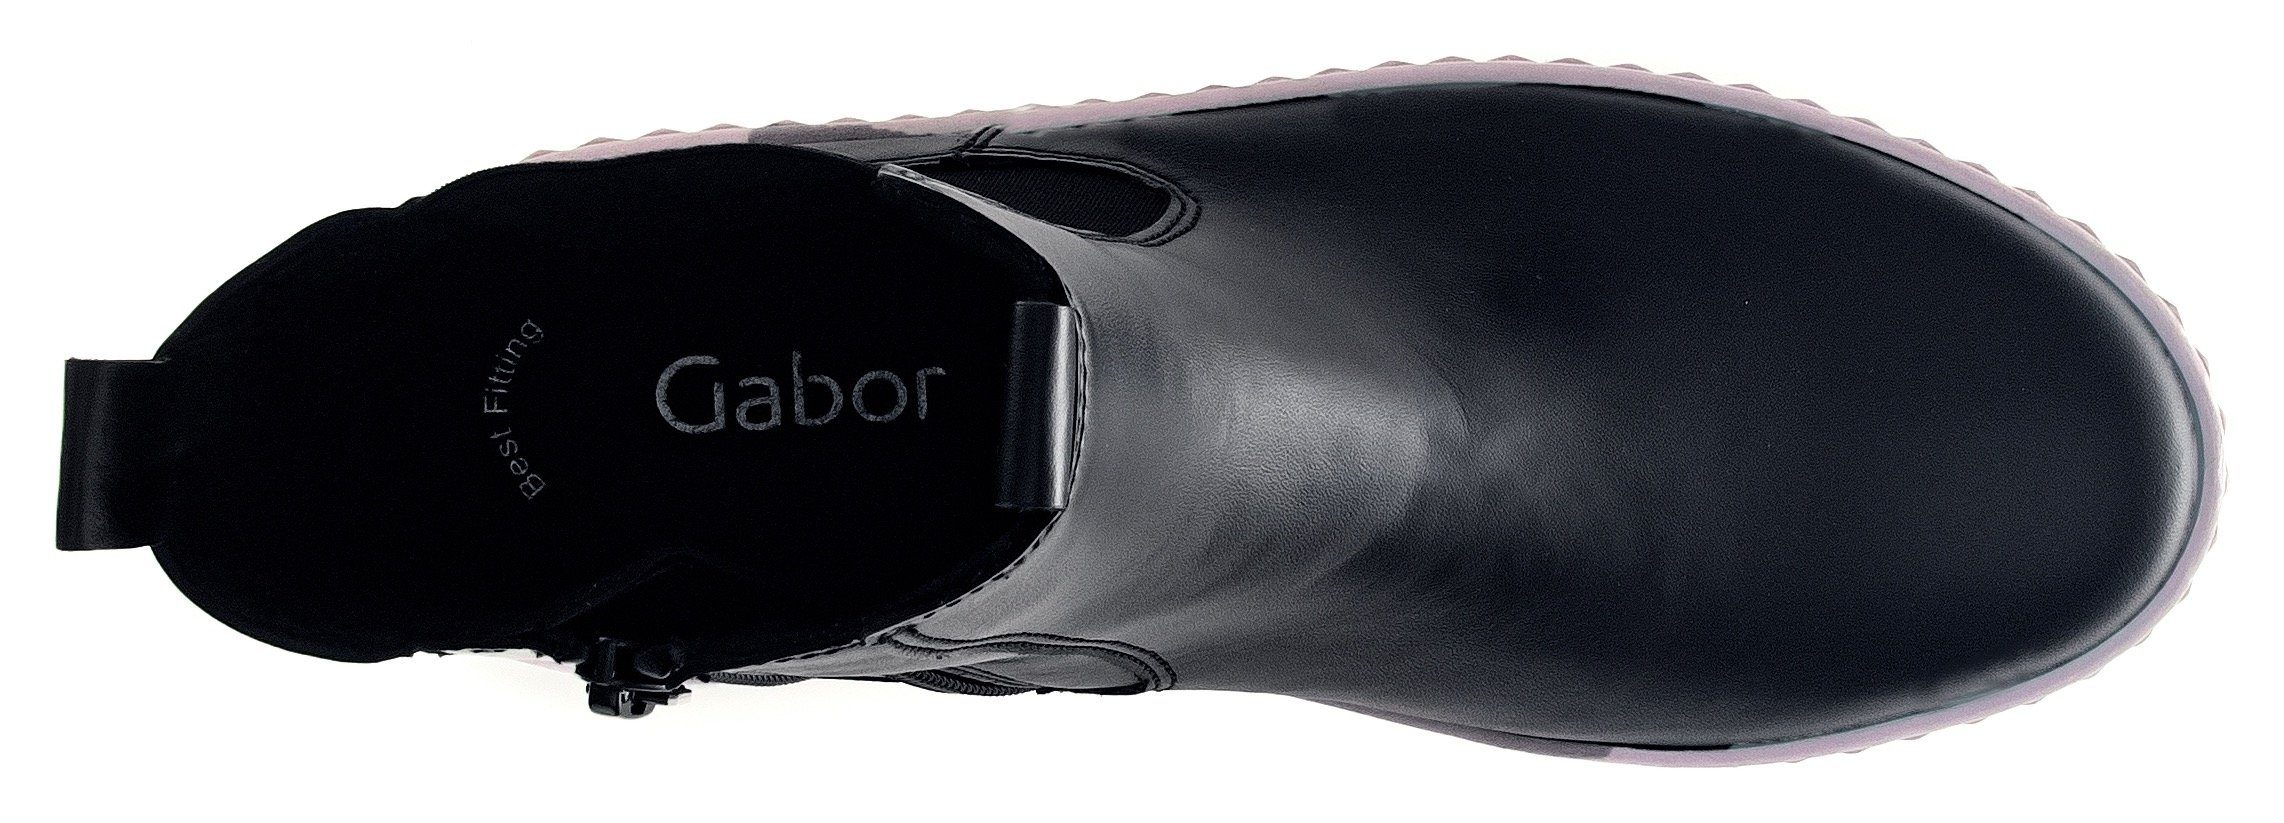 Gabor kontrastfarbiger mit Chelseaboots Plateausohle schwarz